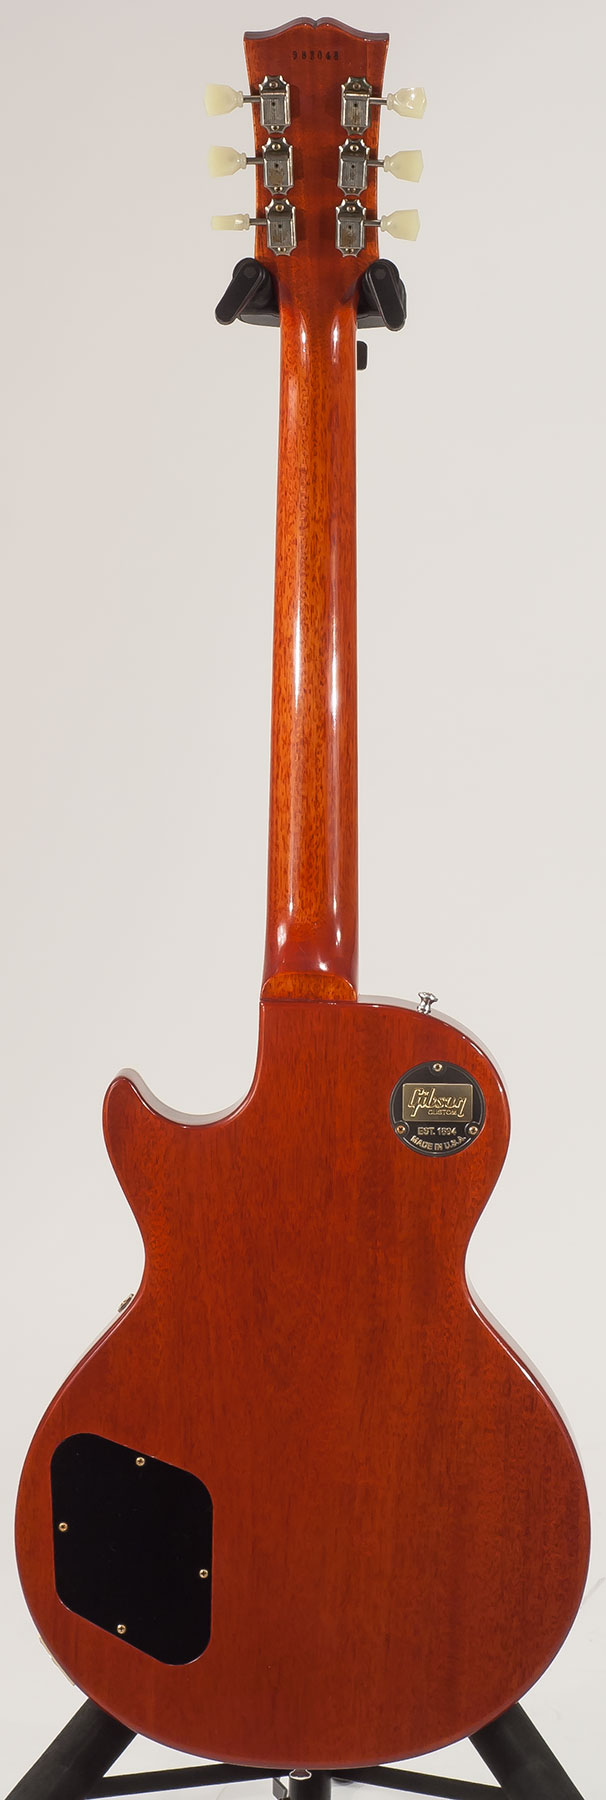 Gibson Custom Shop Les Paul Standard 1959 2h Ht Rw - Vos Vintage Cherry Sunburst - Single cut electric guitar - Variation 1